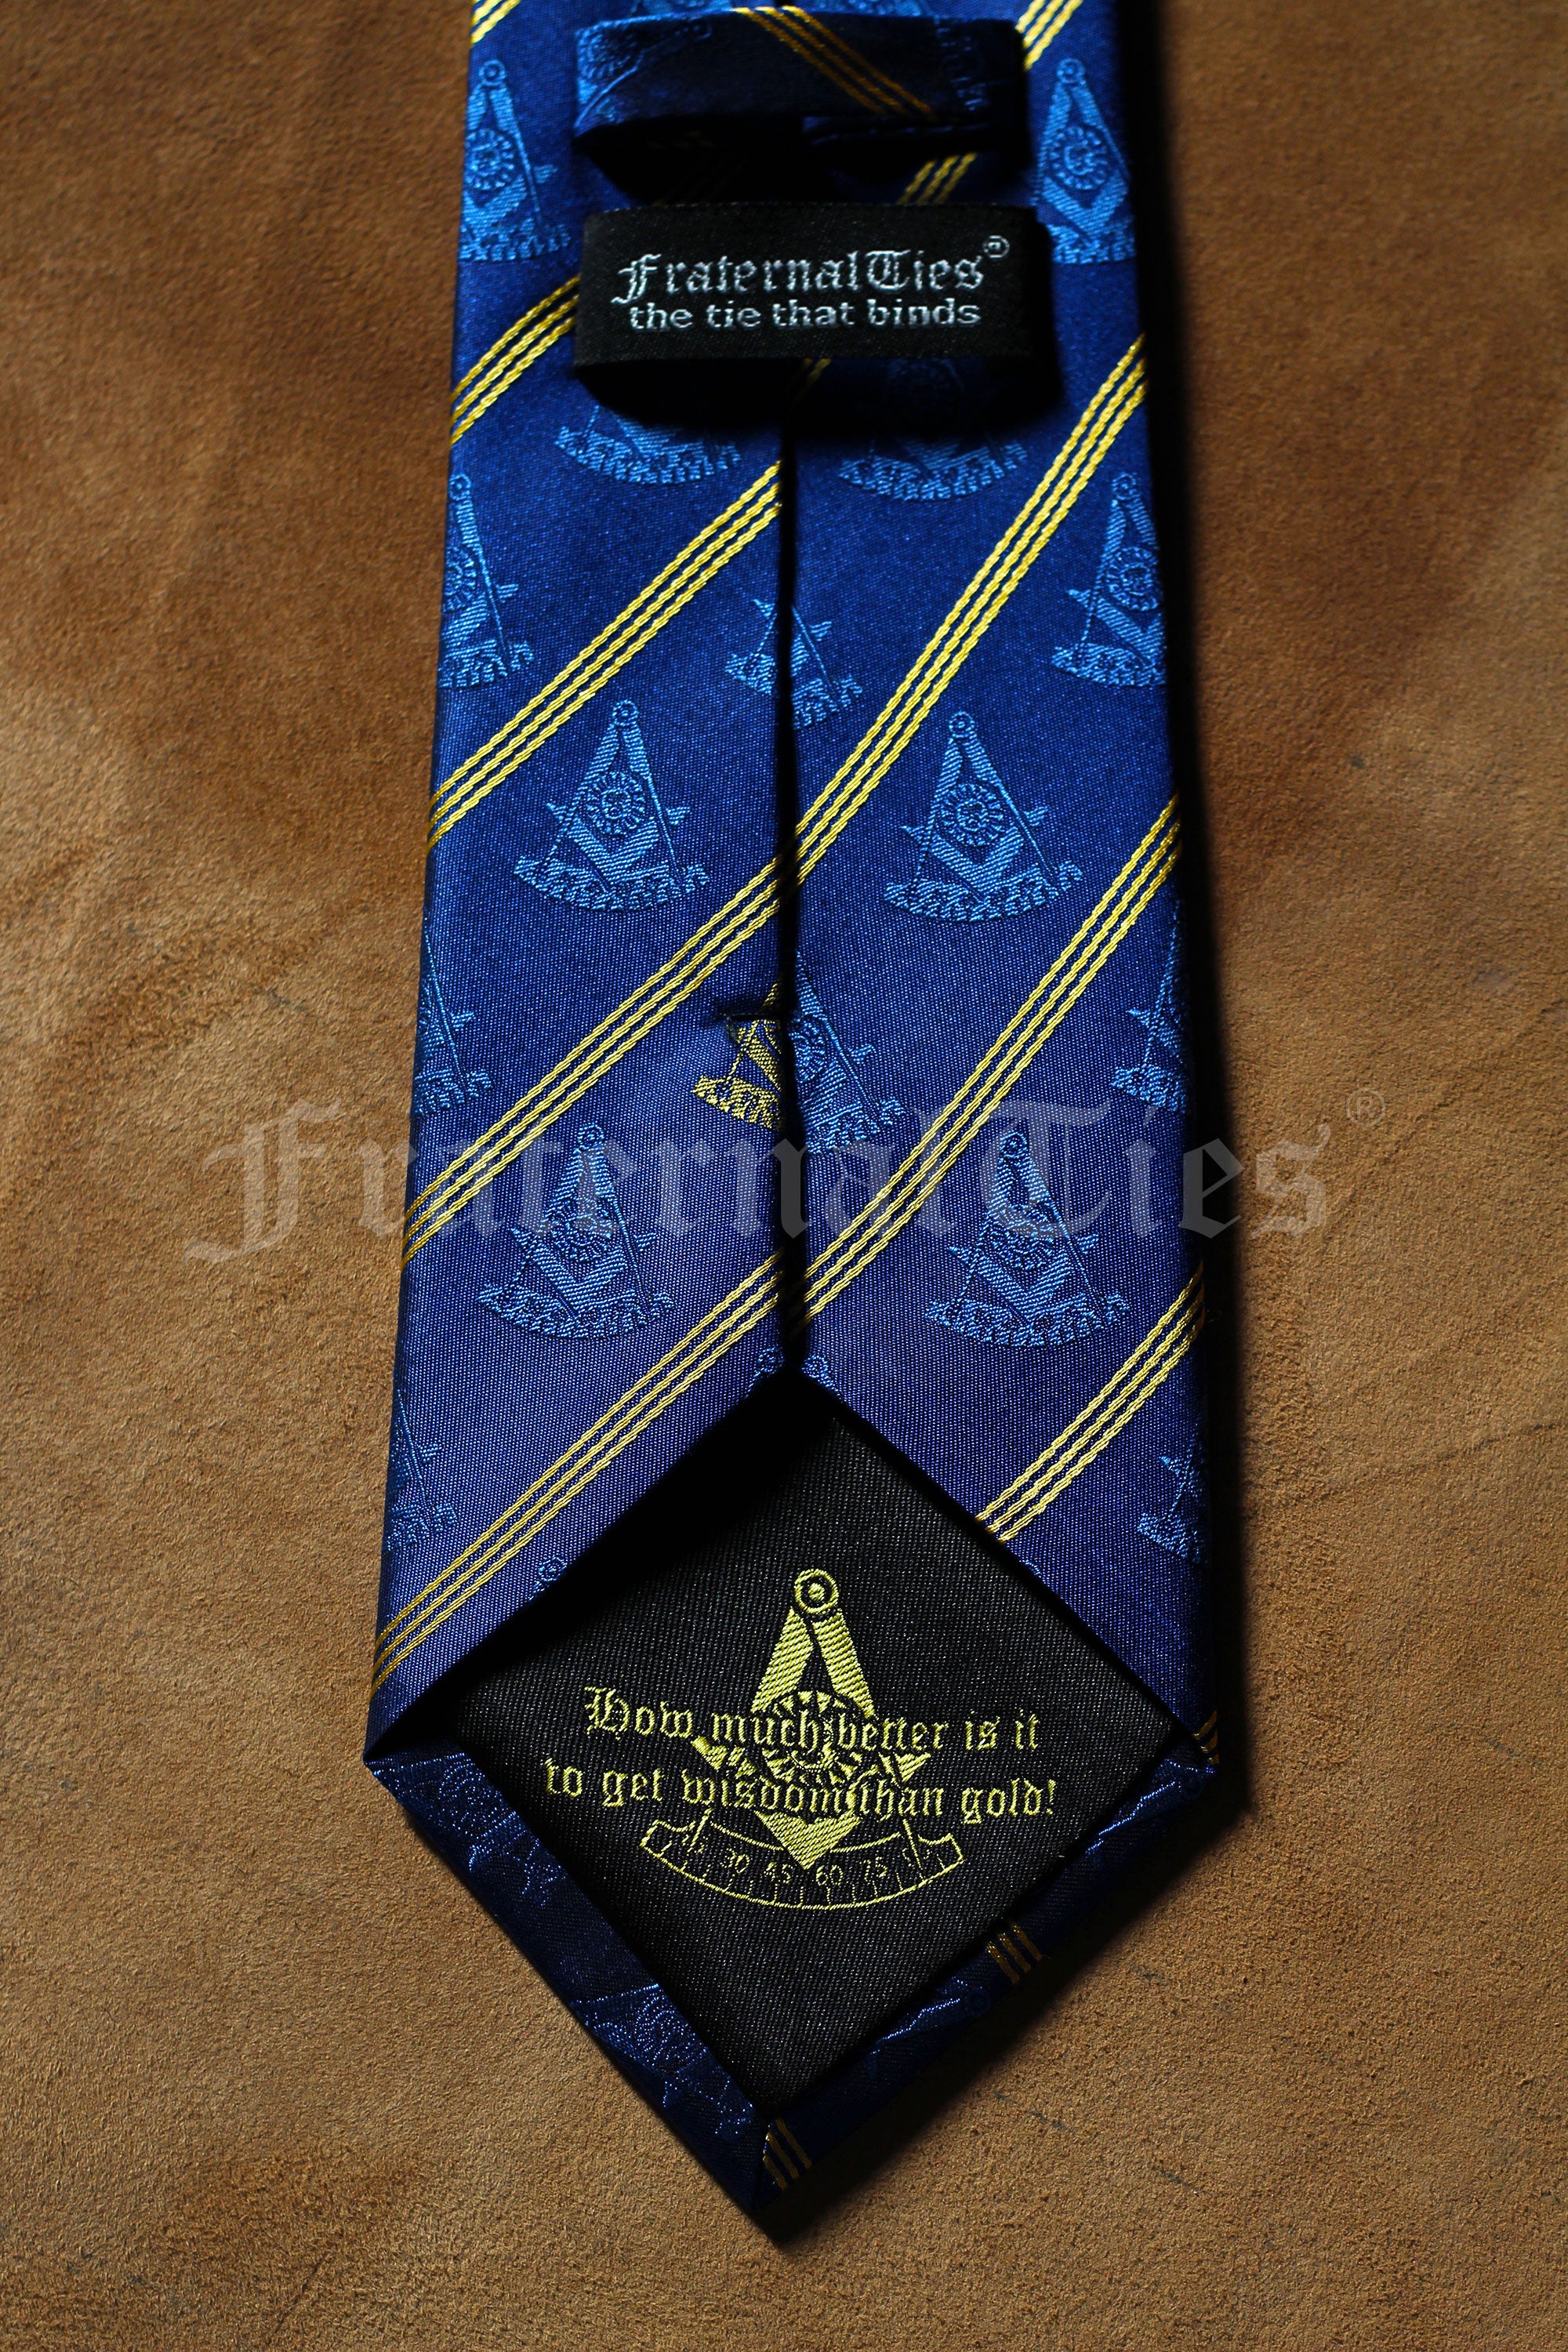 The Past Master Tie